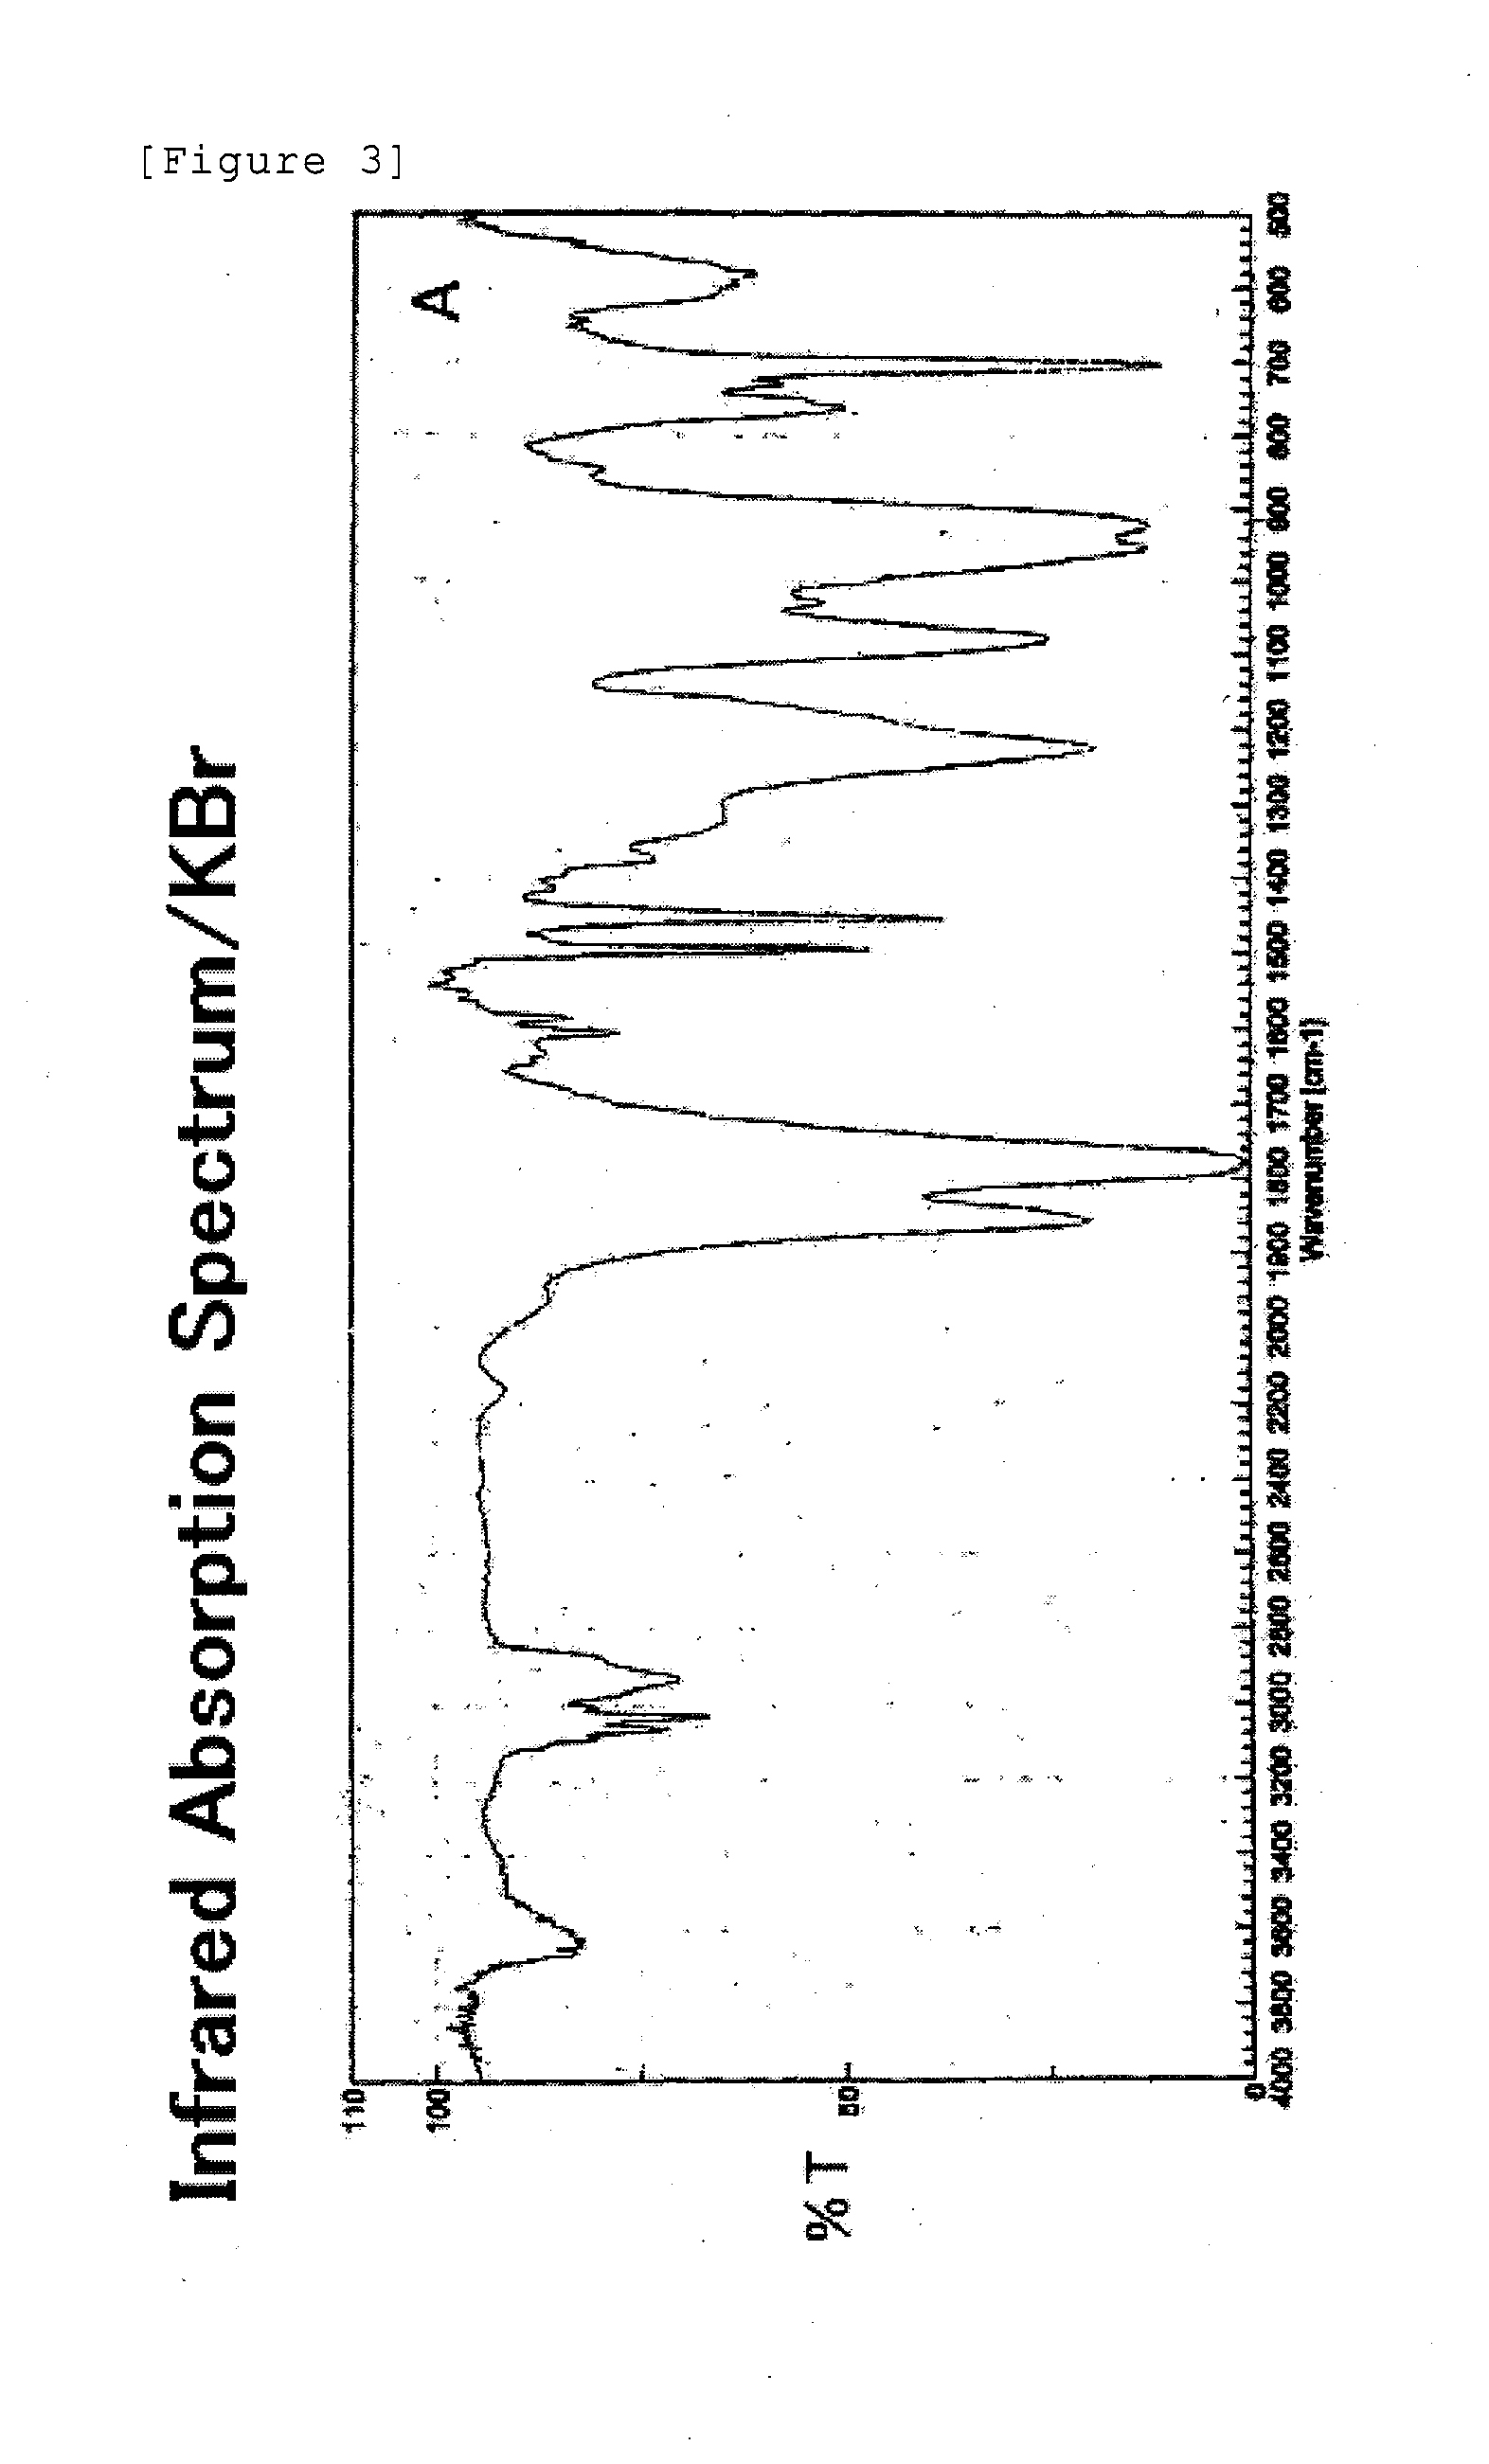 Derivative of styrene-maleic acid copolymer